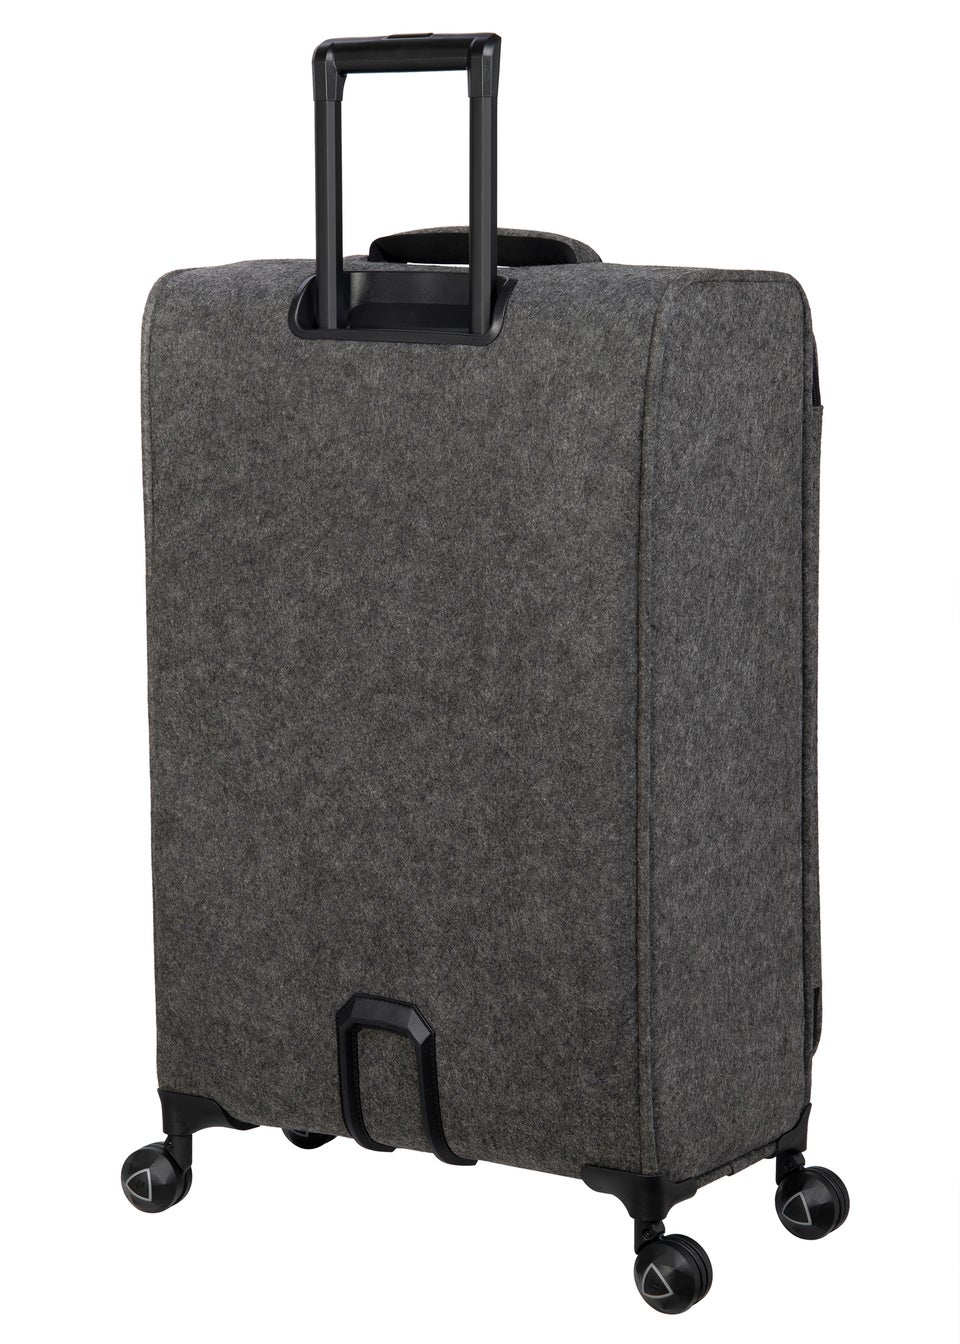 BritBag Perissa Cabin Tech Grey Suitcase with TSA Lock